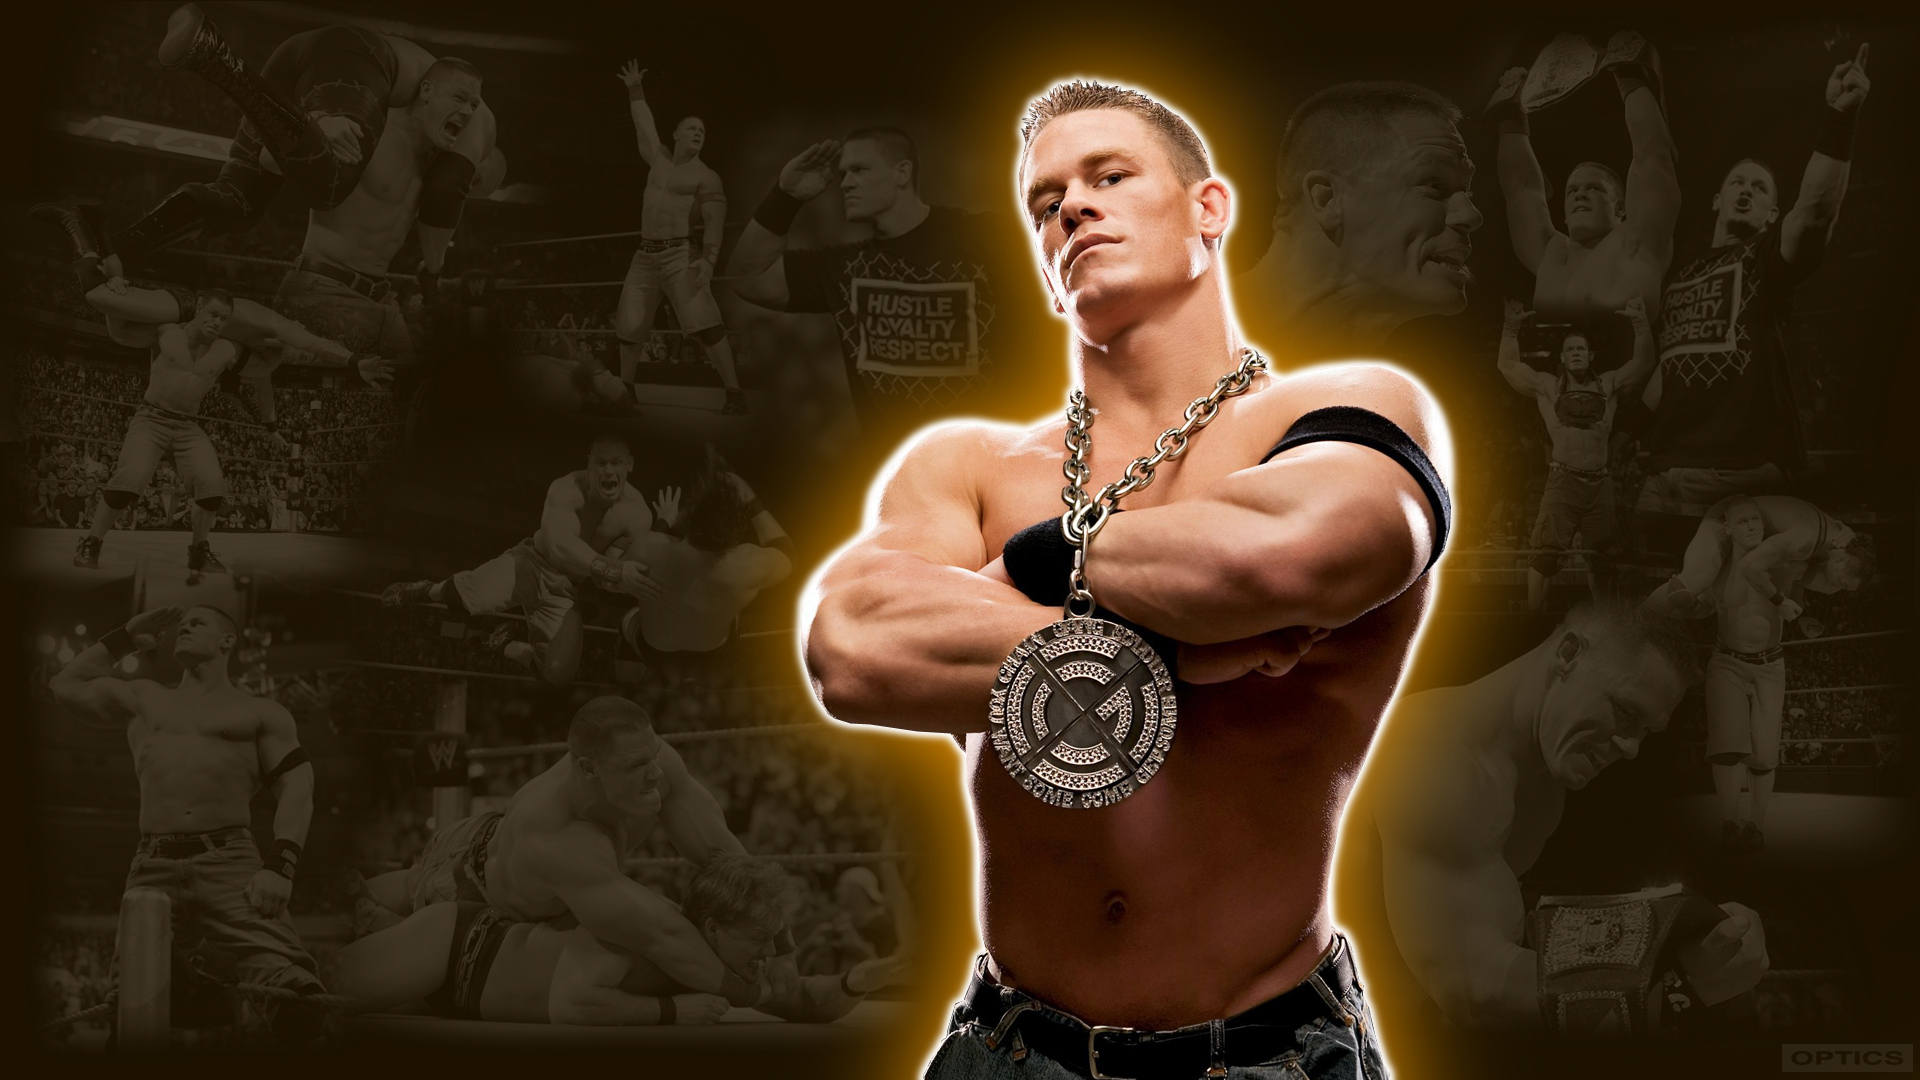 WWE John Cena Wallpaper For Desktop Free Download